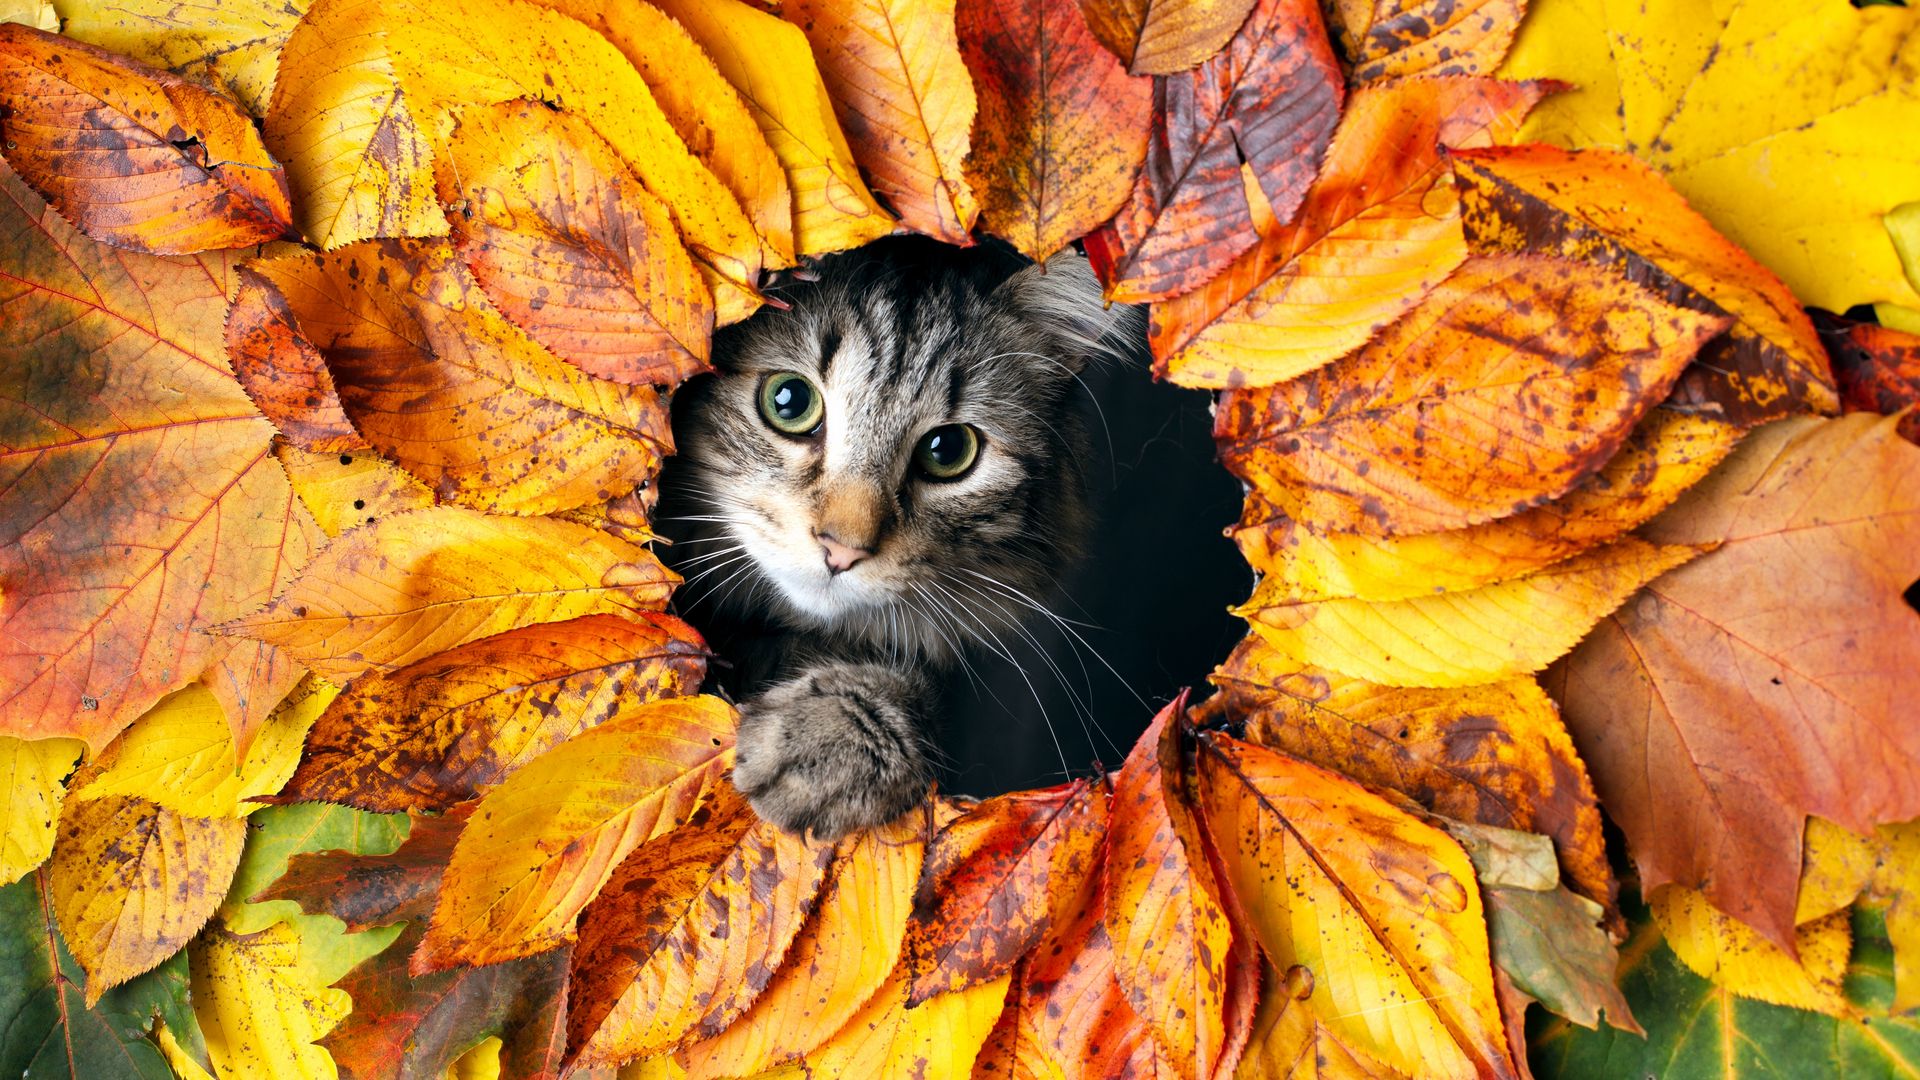 Download wallpaper 1920x1080 cat, leaves, autumn, pet full hd, hdtv